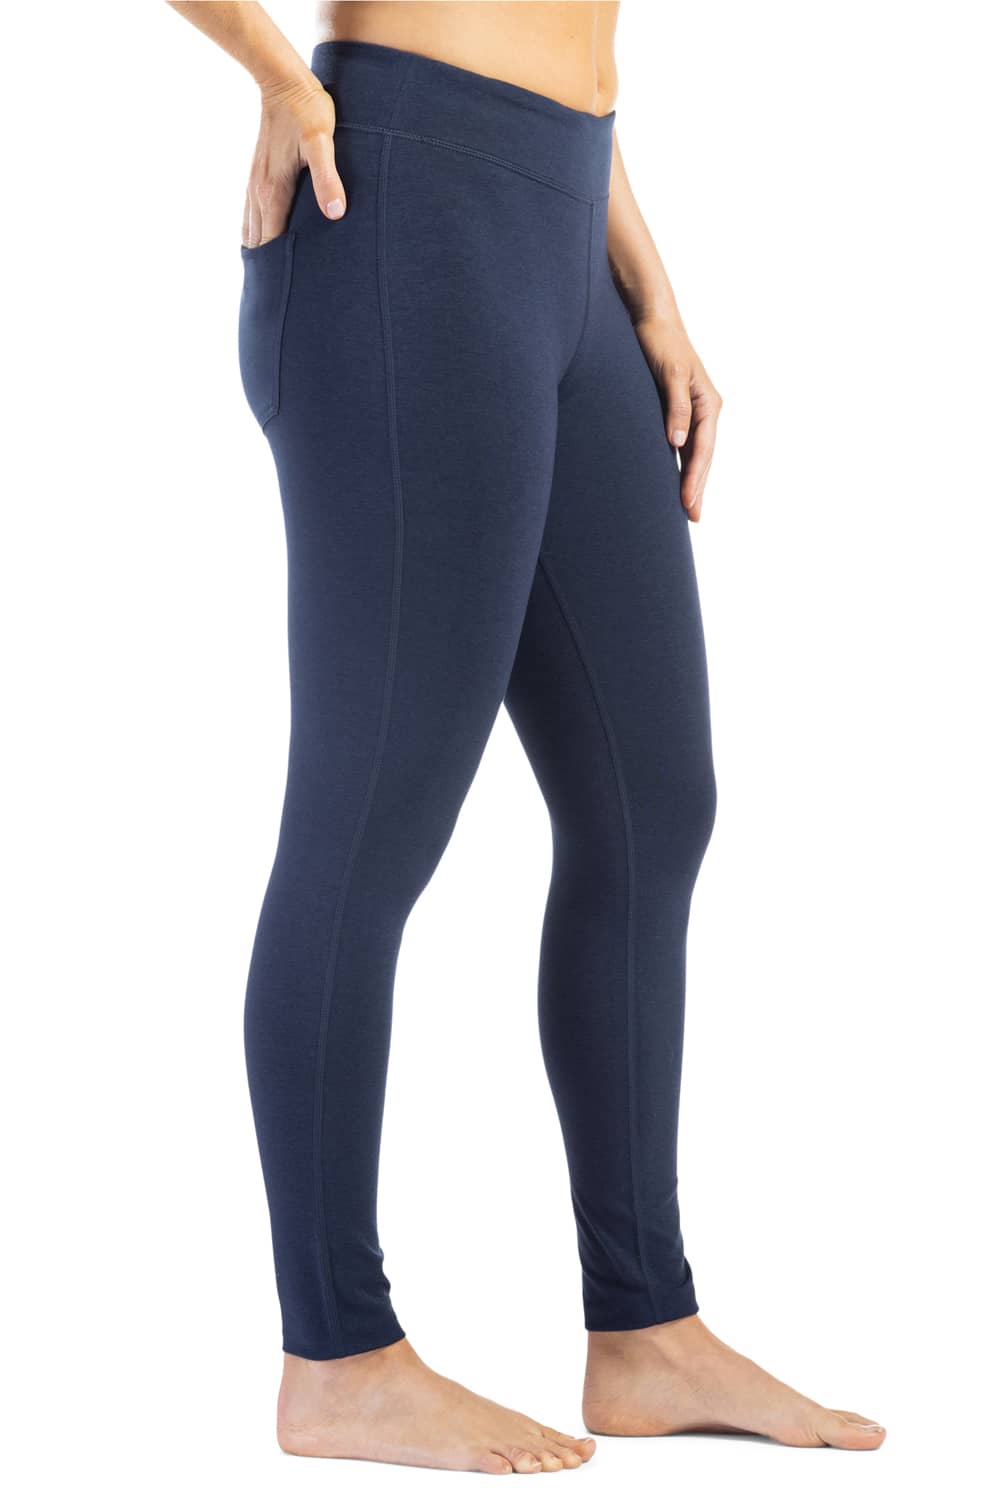 Women's Cargo Leggings with Pockets in blue  Activewear yoga Leggings –  Baller Babe Active Wear